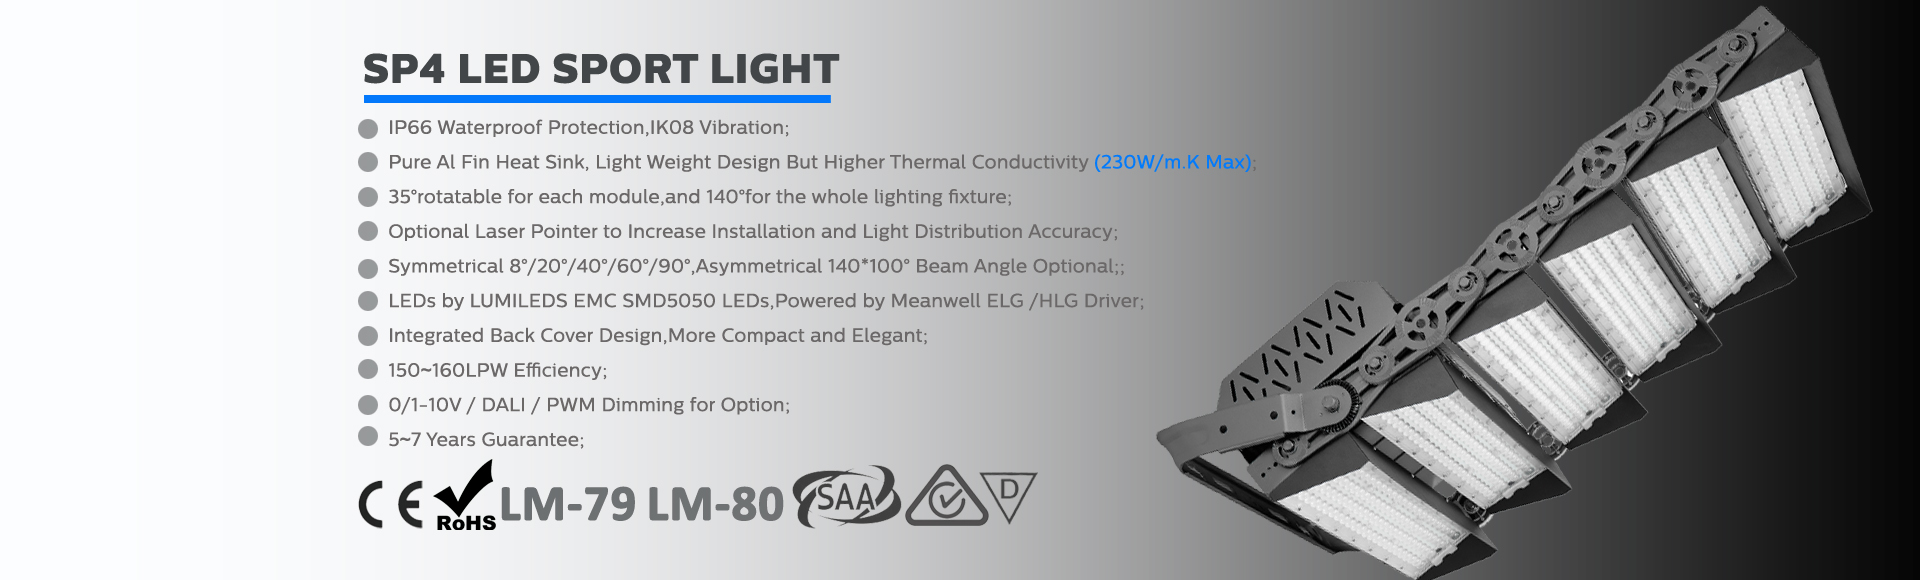 SP4 LED Sport Light